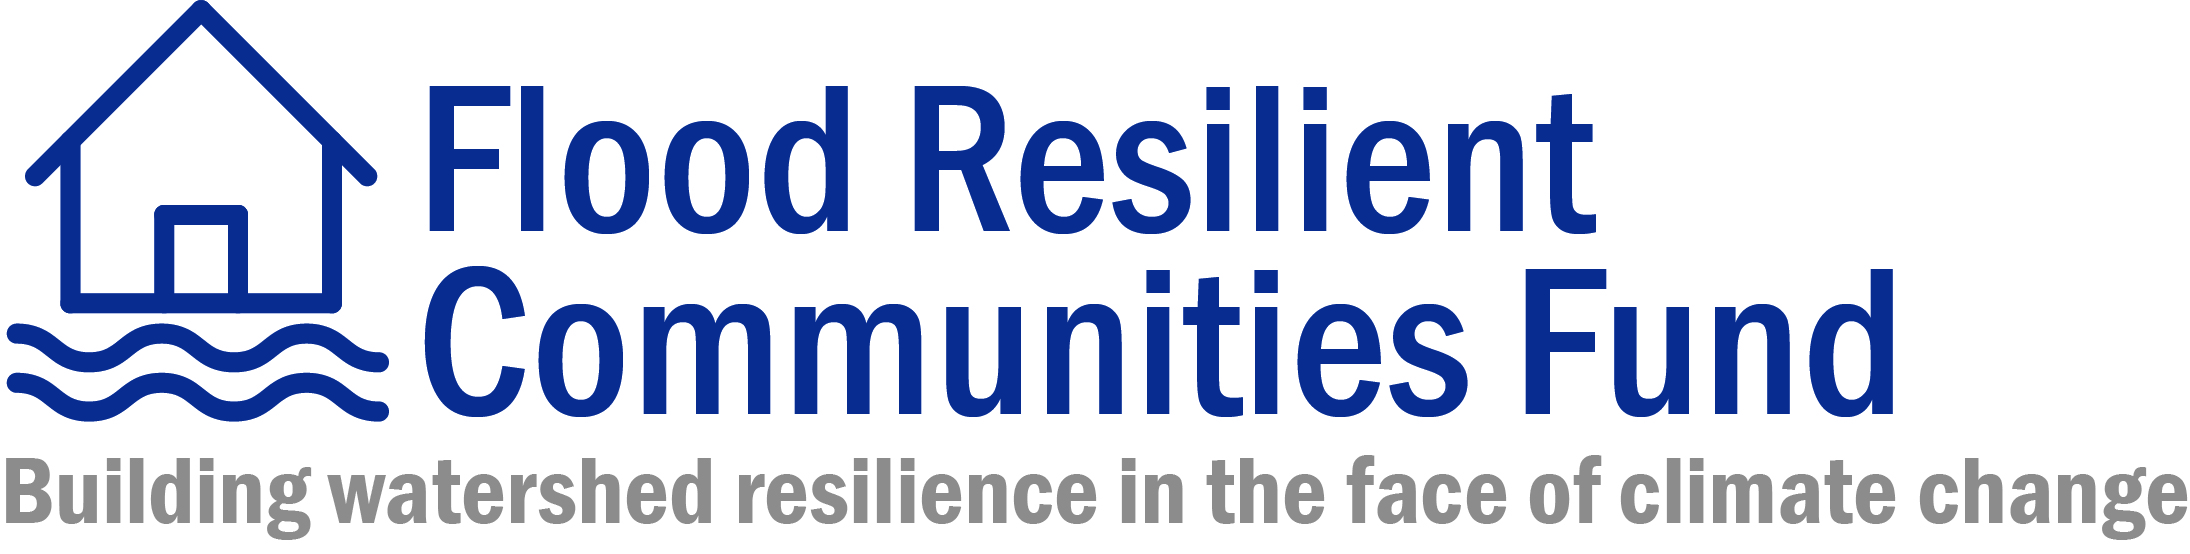 Flood Resilient Communities Fund Logo